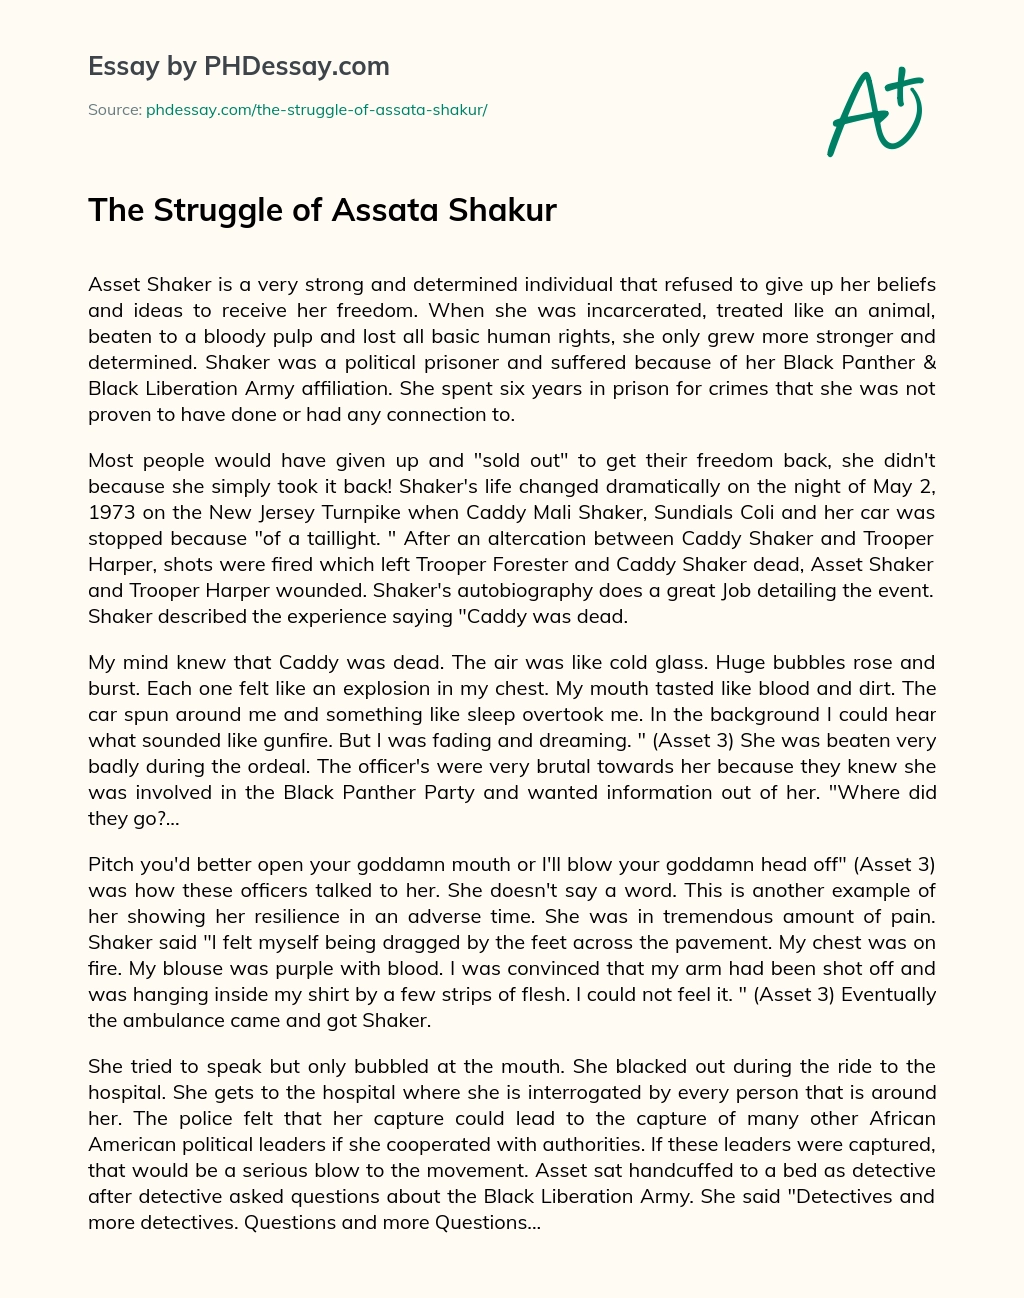 The Struggle of Assata Shakur essay